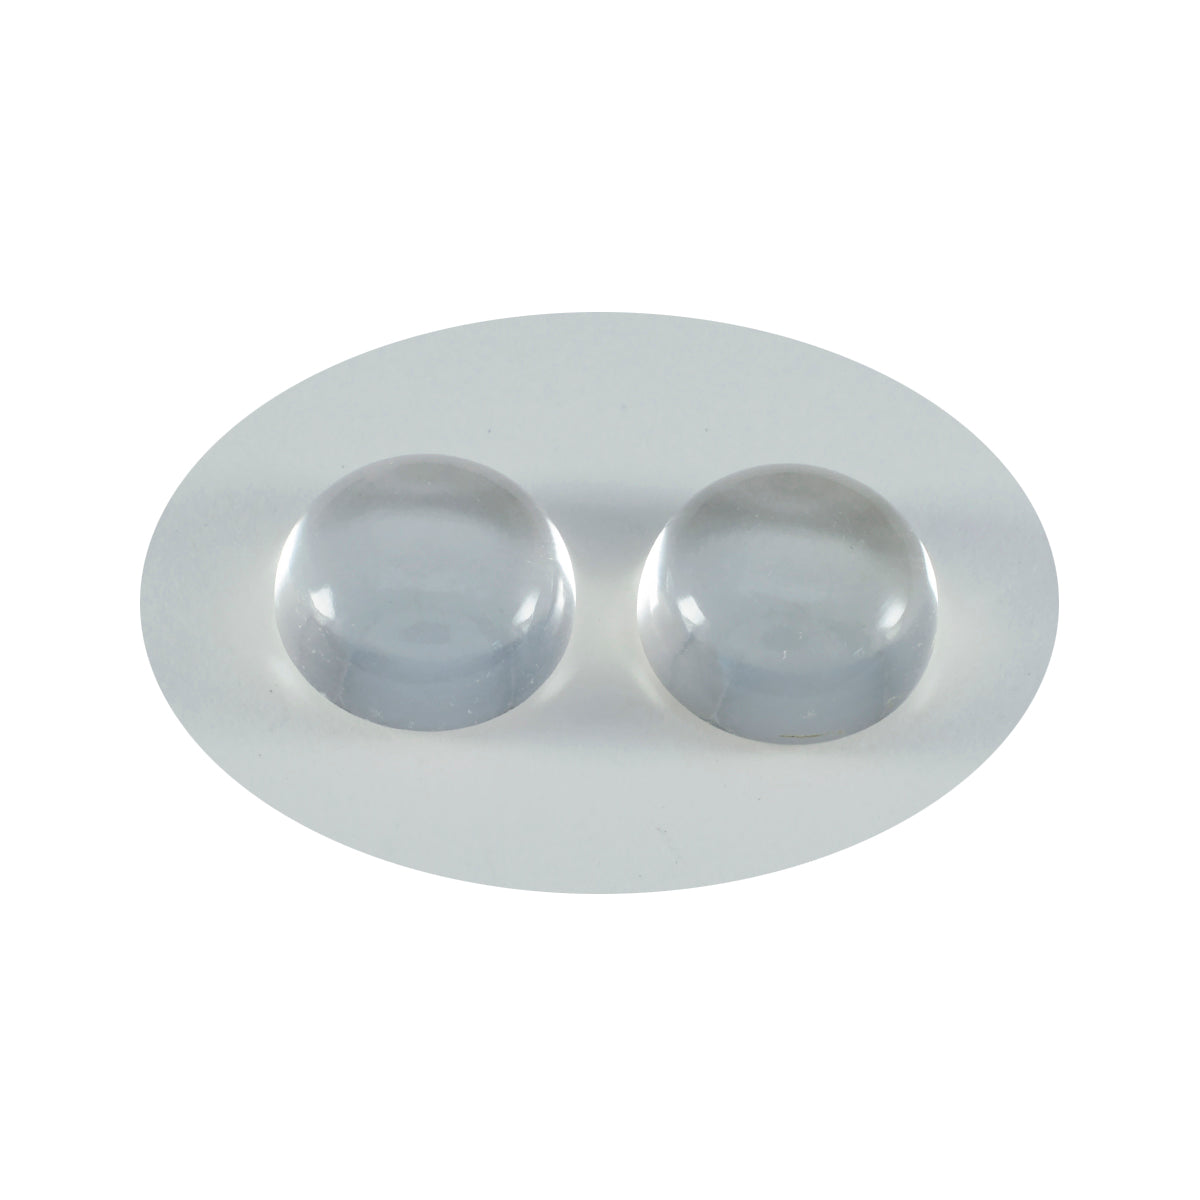 Riyogems 1PC White Crystal Quartz Cabochon 12x12 mm Round Shape attractive Quality Loose Gems